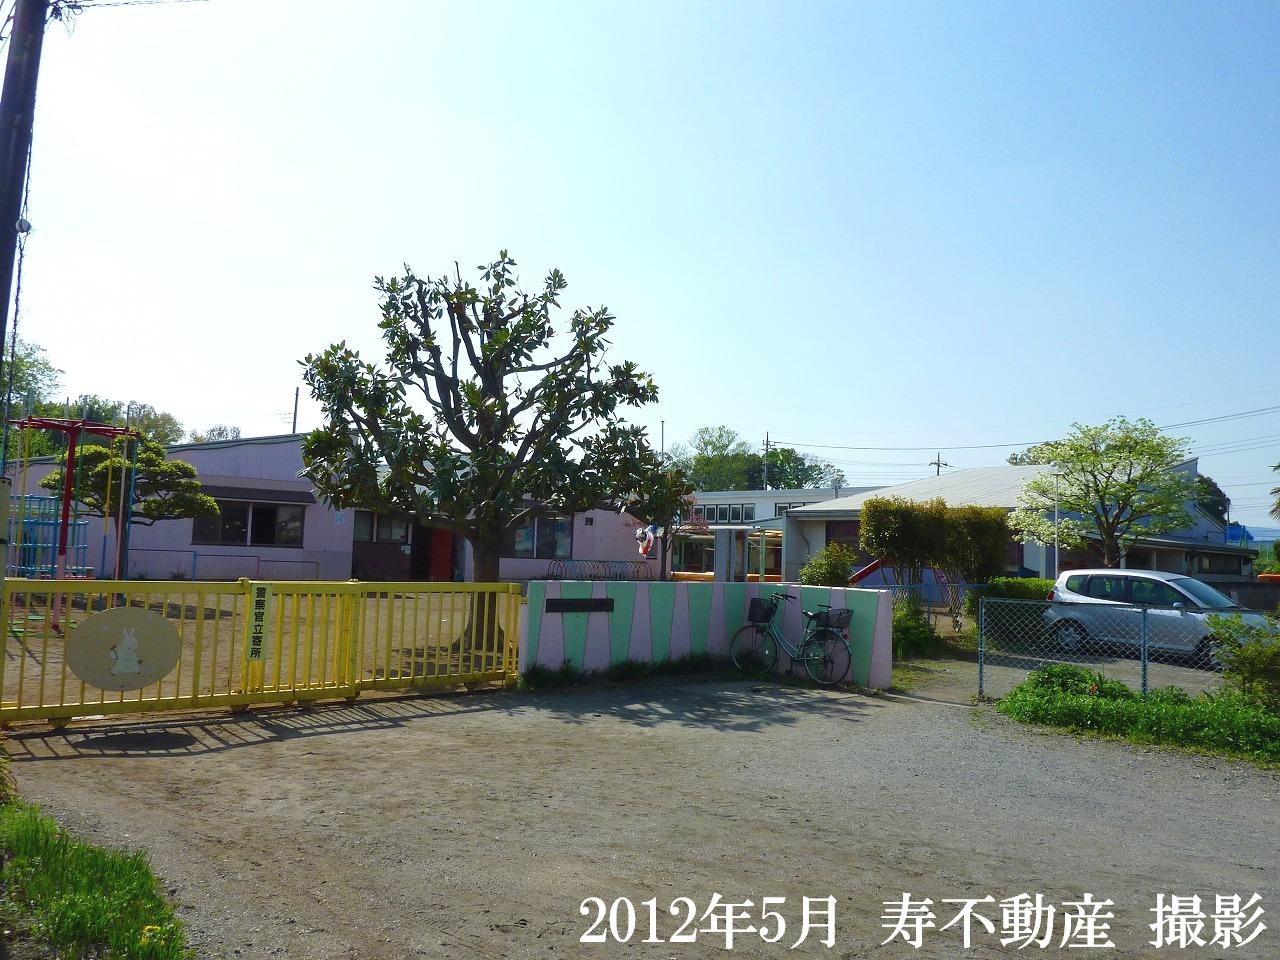 kindergarten ・ Nursery. Okegawa Hideya nursery school (kindergarten ・ 562m to the nursery)